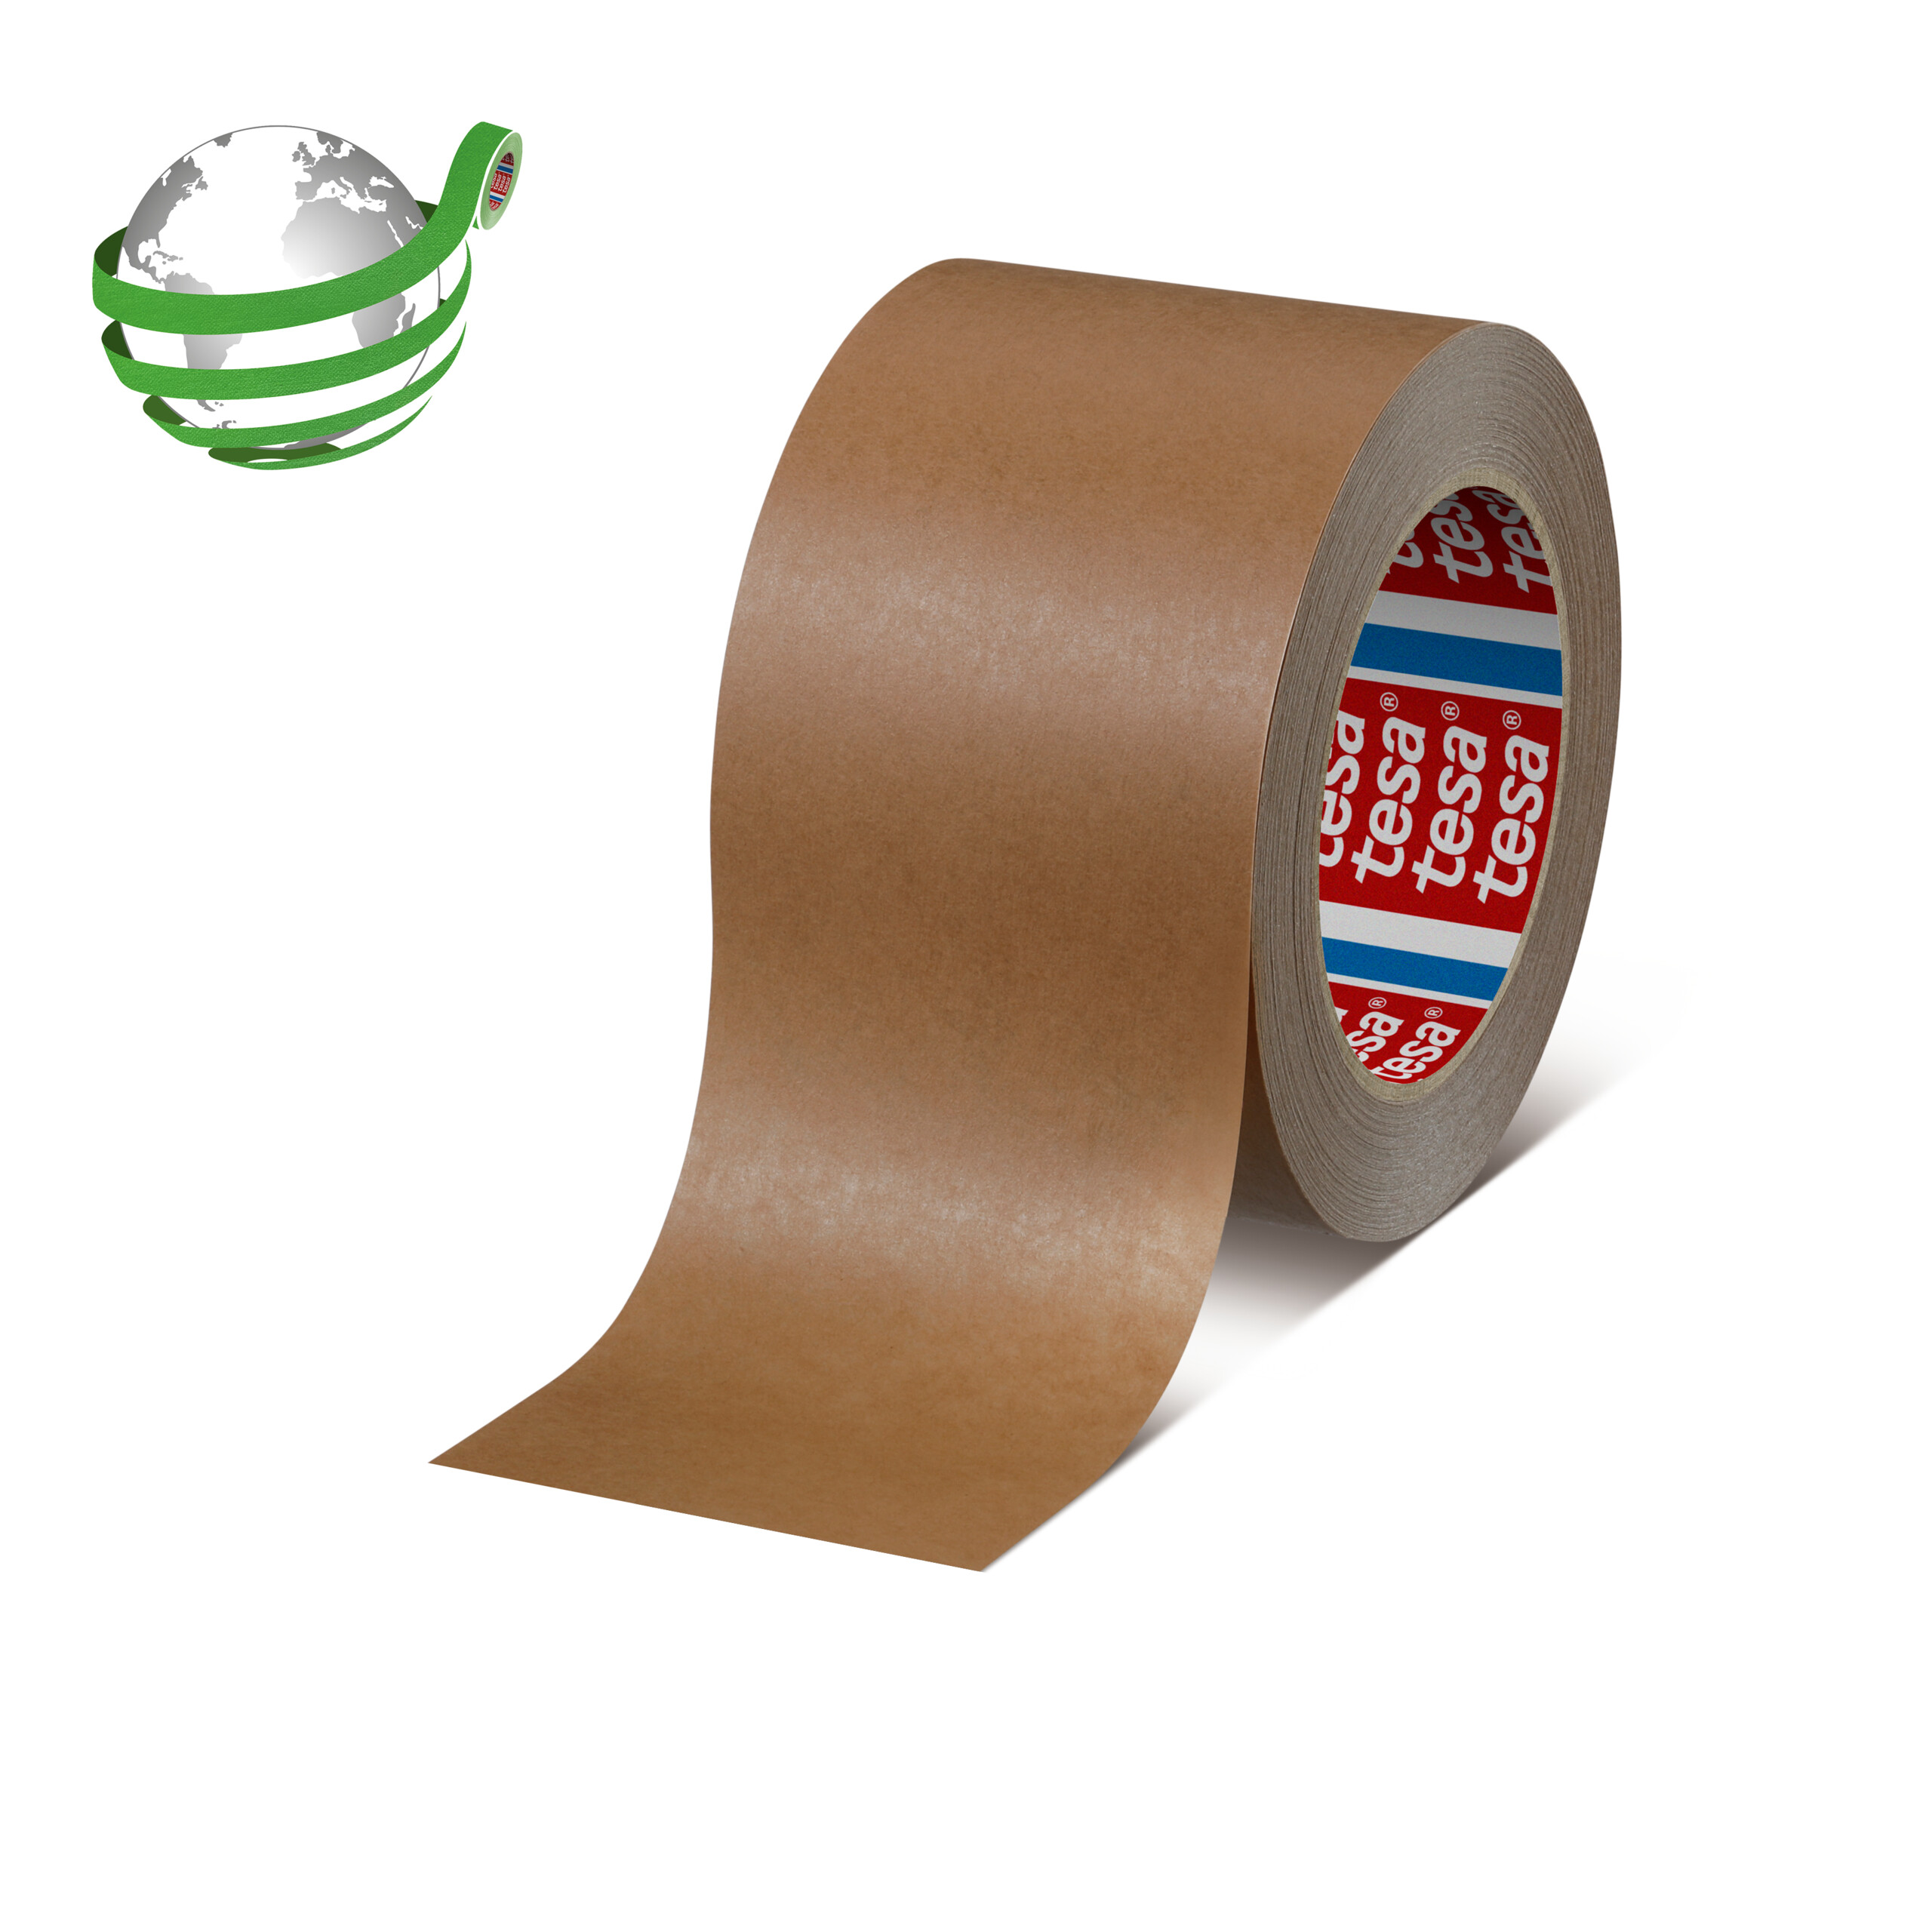 tesa 4313 tesapack PV12 Papierklebeband mit Hotmeltkleber braun 150 mm x 500 m